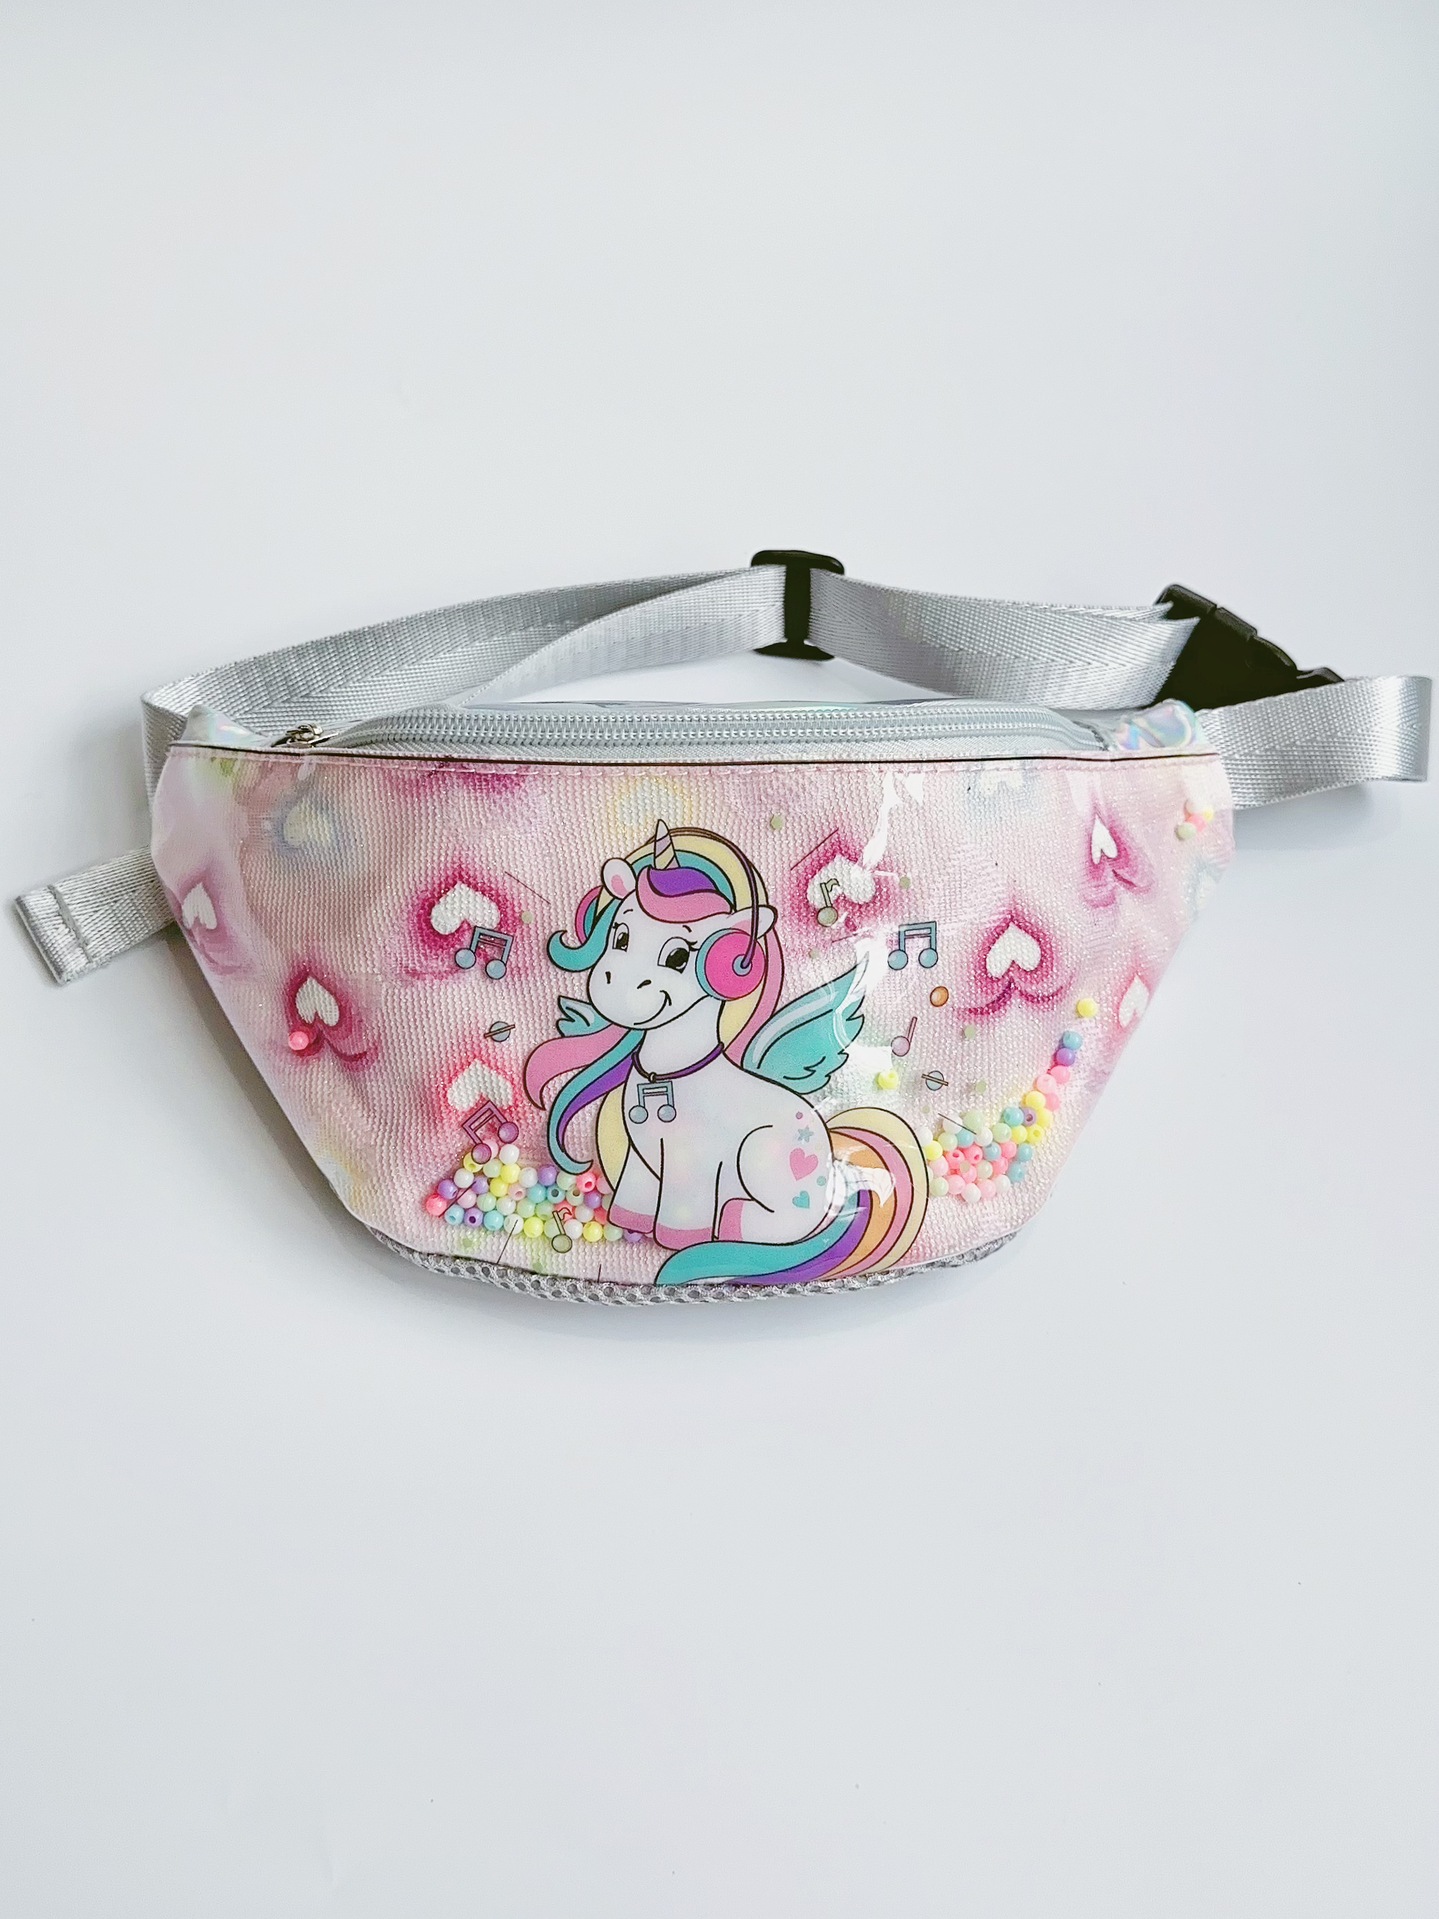 New Pvc Love Unicorn Children's Waist Bag Cute Fashion Princess Bag Magic Color Unicorn Chest Bag Messenger Bag